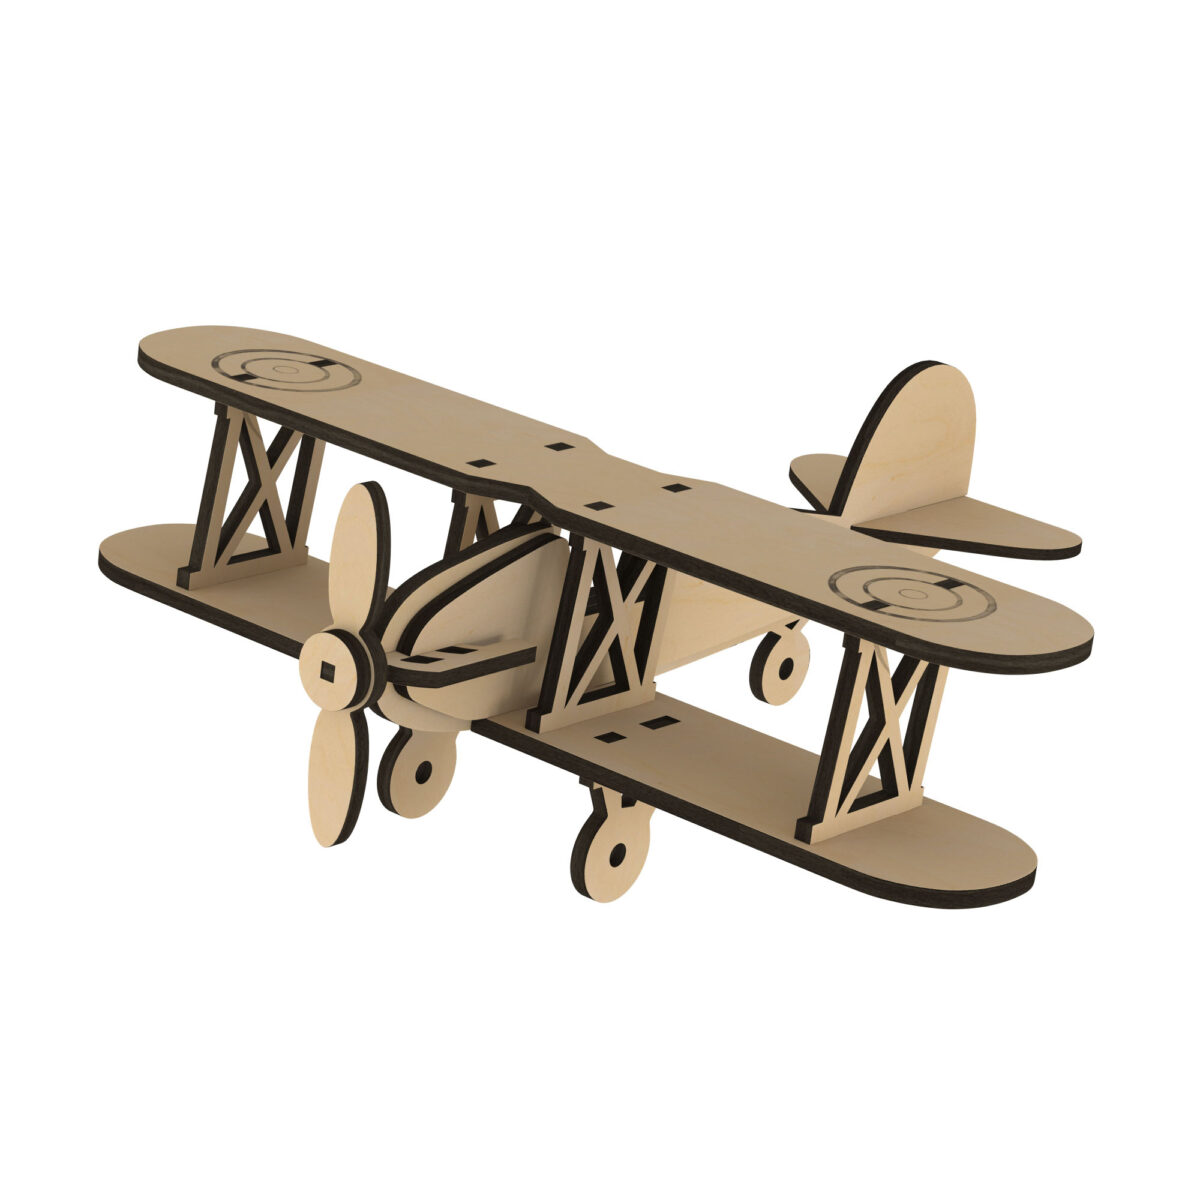 Model of children's wooden airplane Tarhe 3D model download on cg.market, 3ds max, Corona Render.